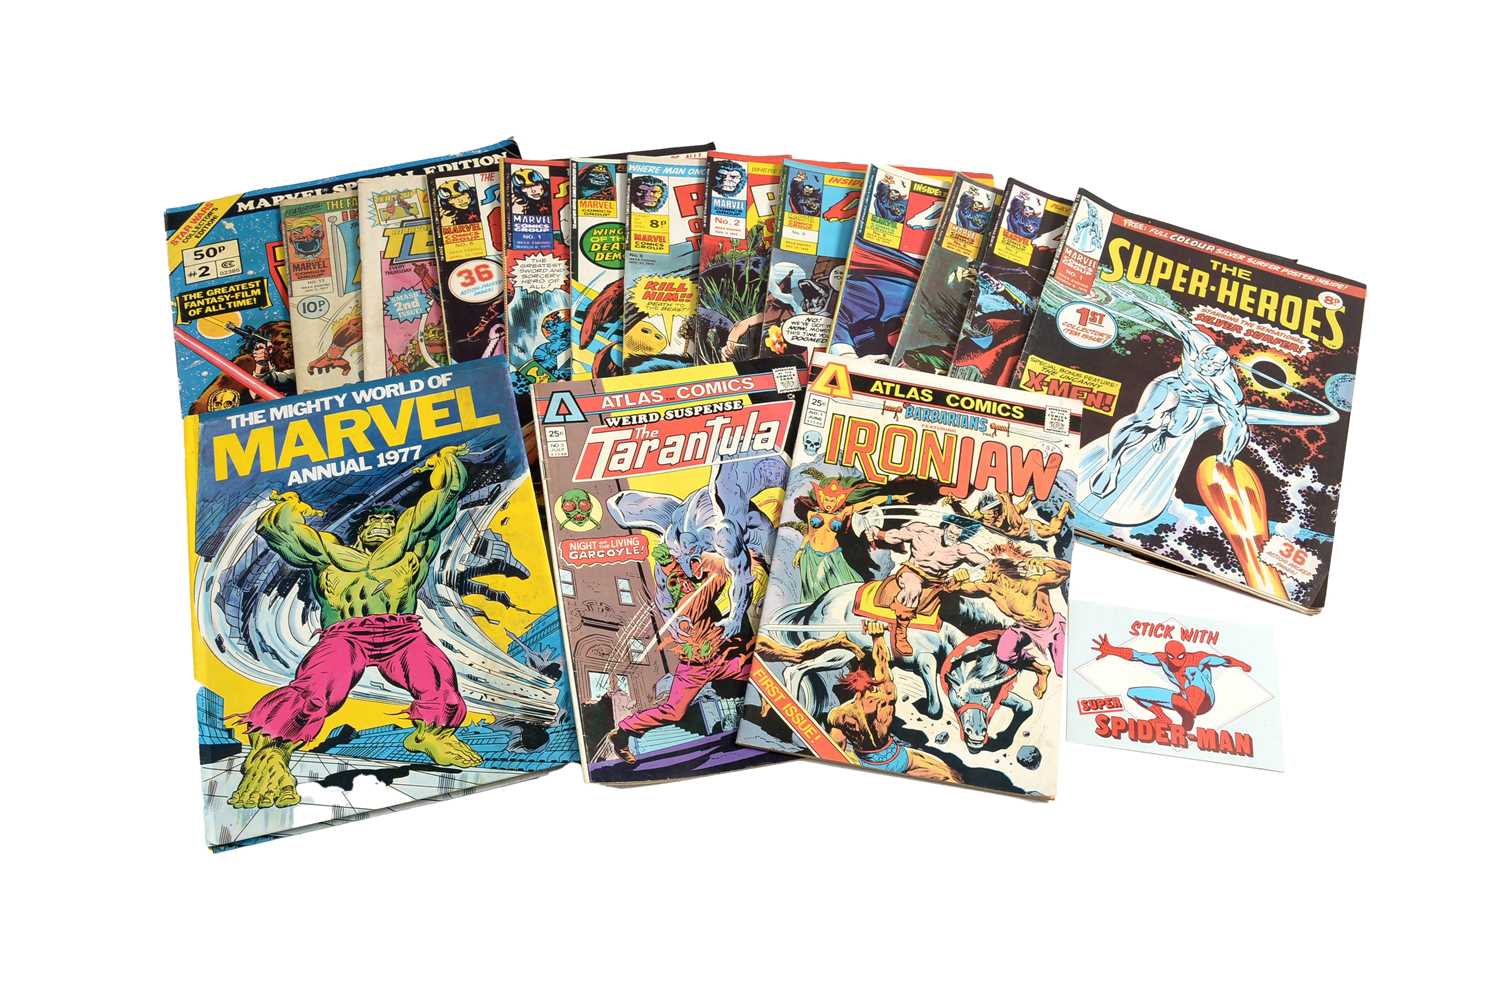 Marvel and Atlas Comics various